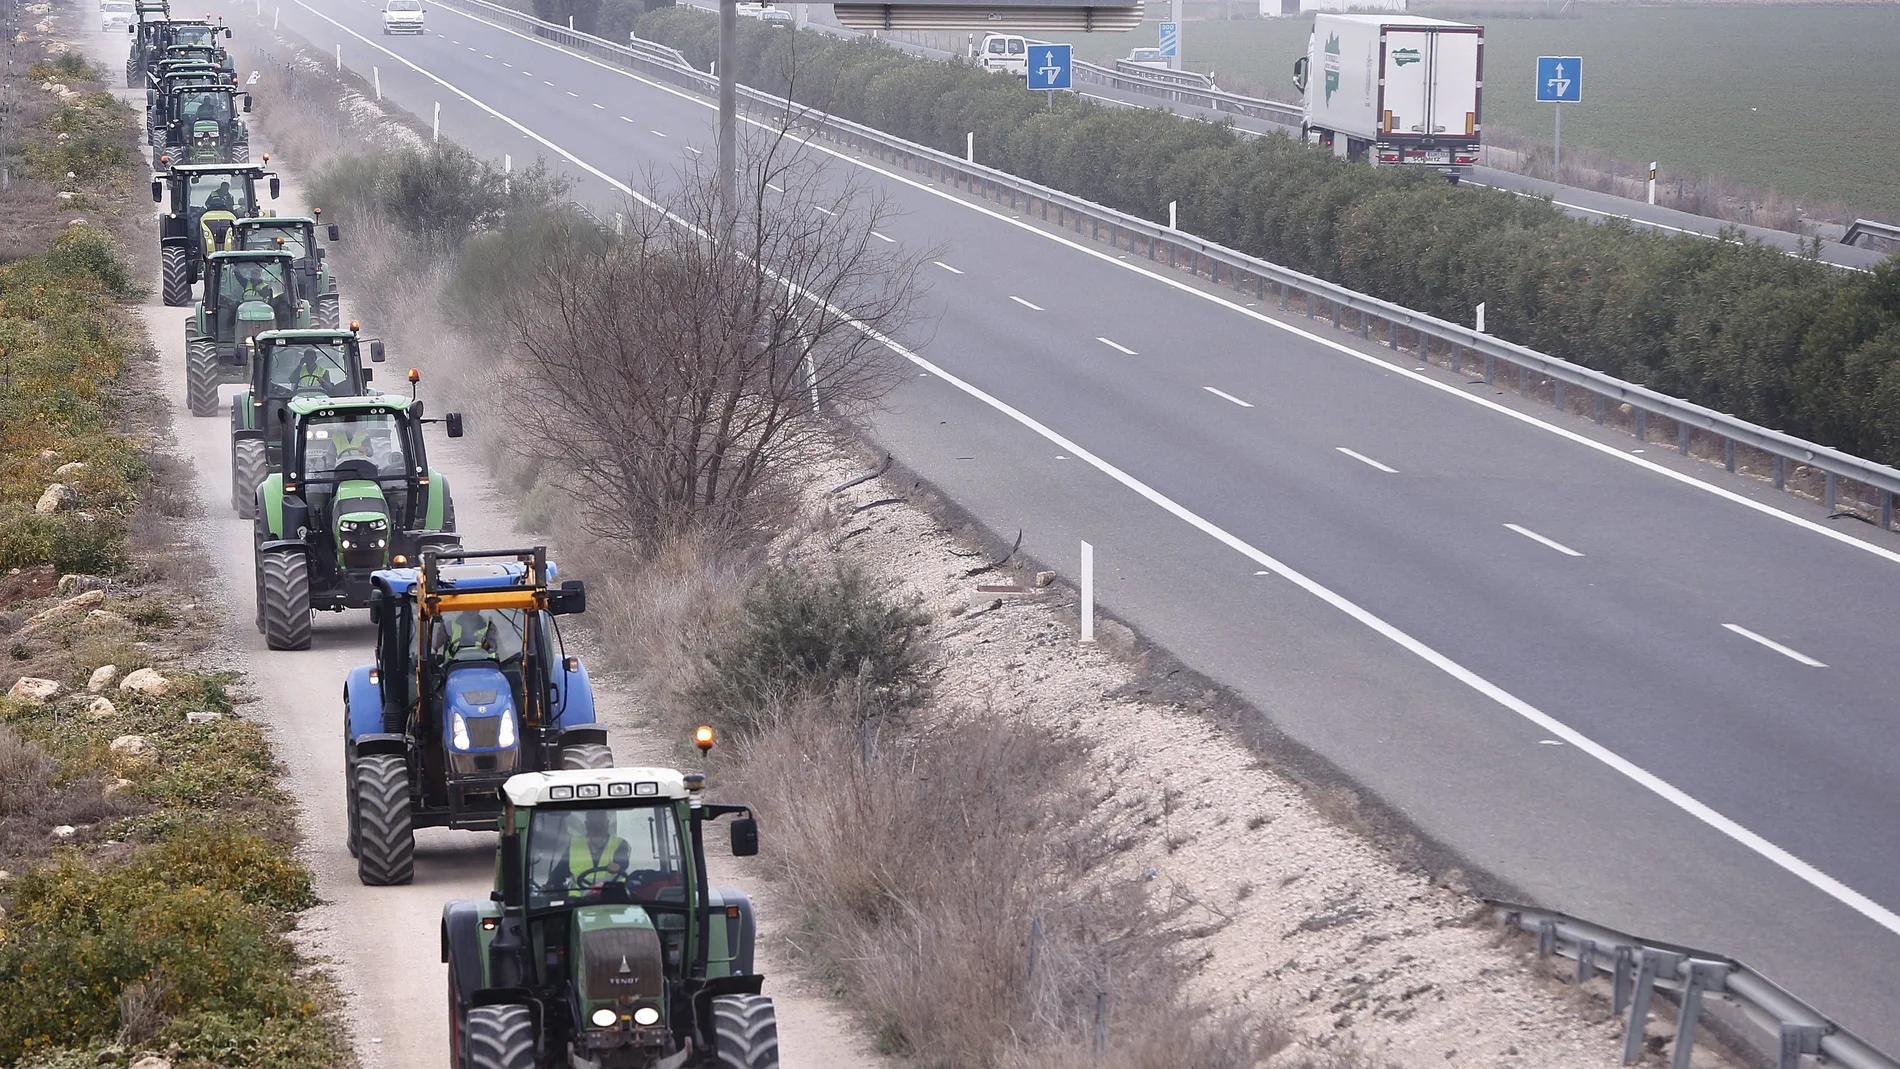 Sindicatos agrarios convocan tractorada reivindicativa